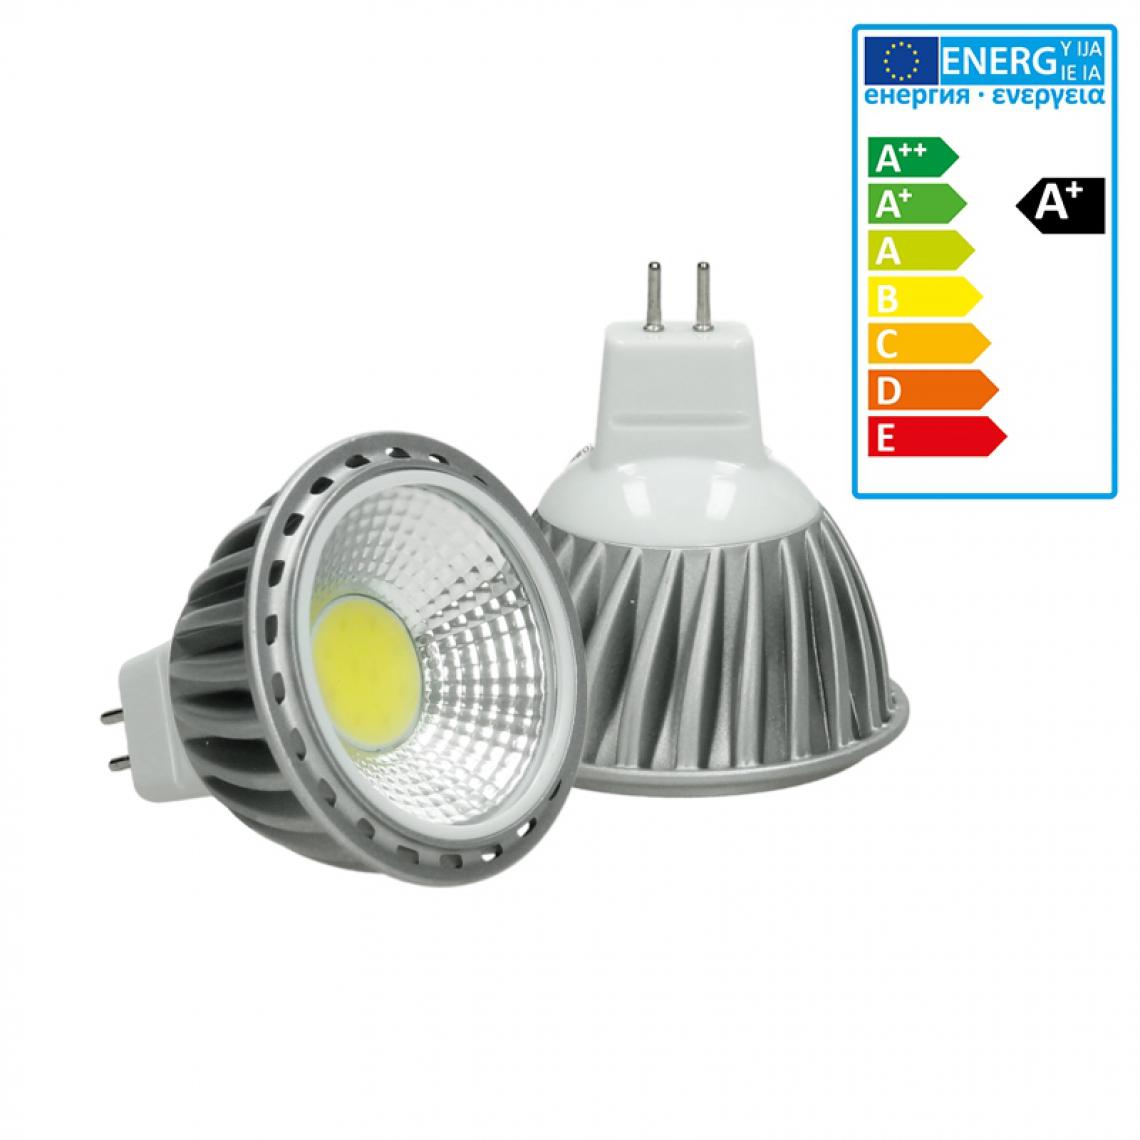 Ecd Germany - ECD Germany LED COB MR16 Spot Lampe Ampoule 6W blanc neutre - Ampoules LED